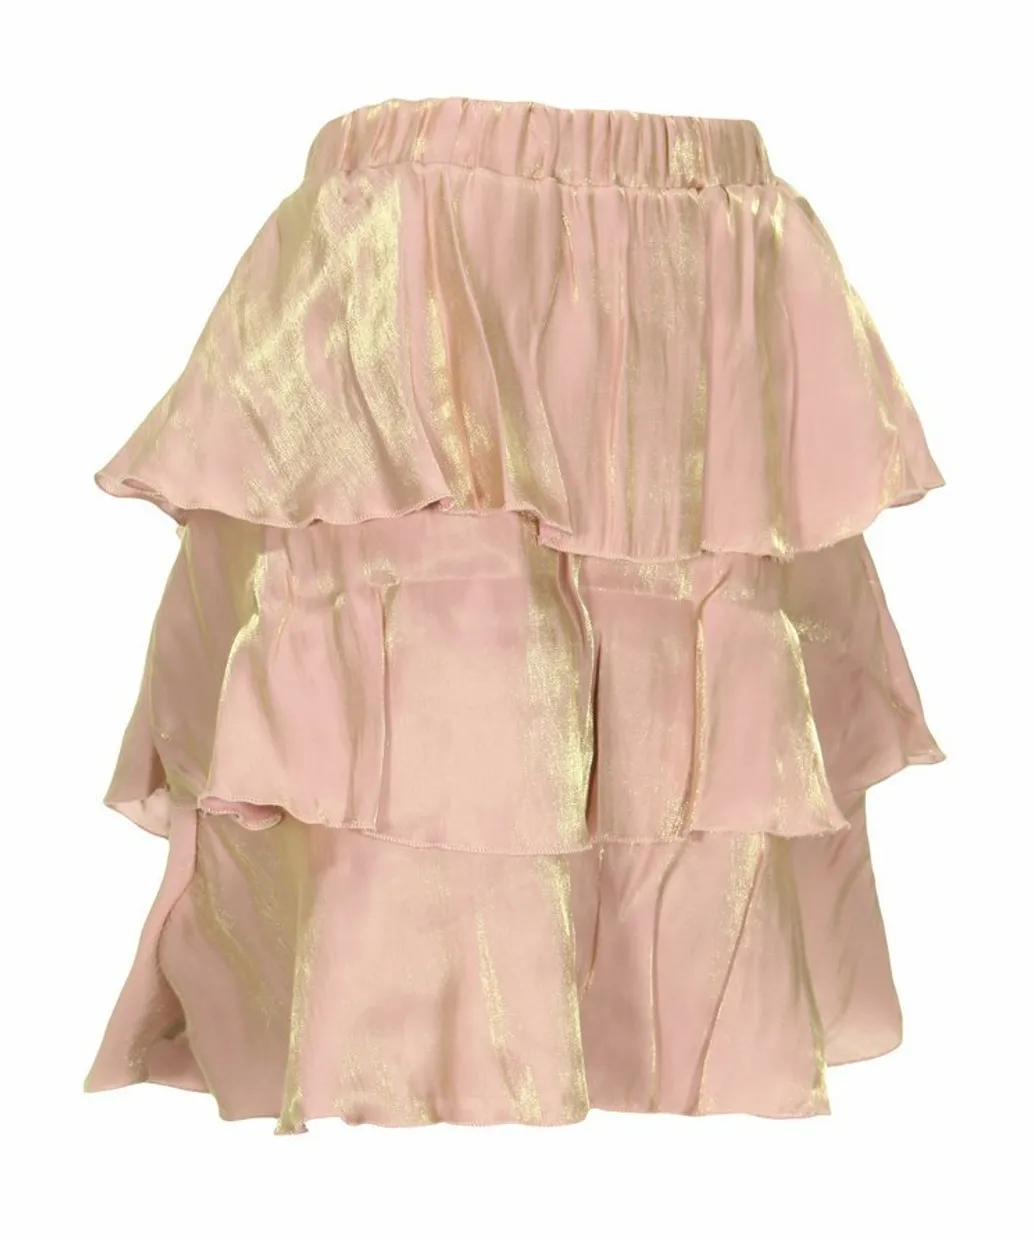 Shiny satin ruffle skirt pink